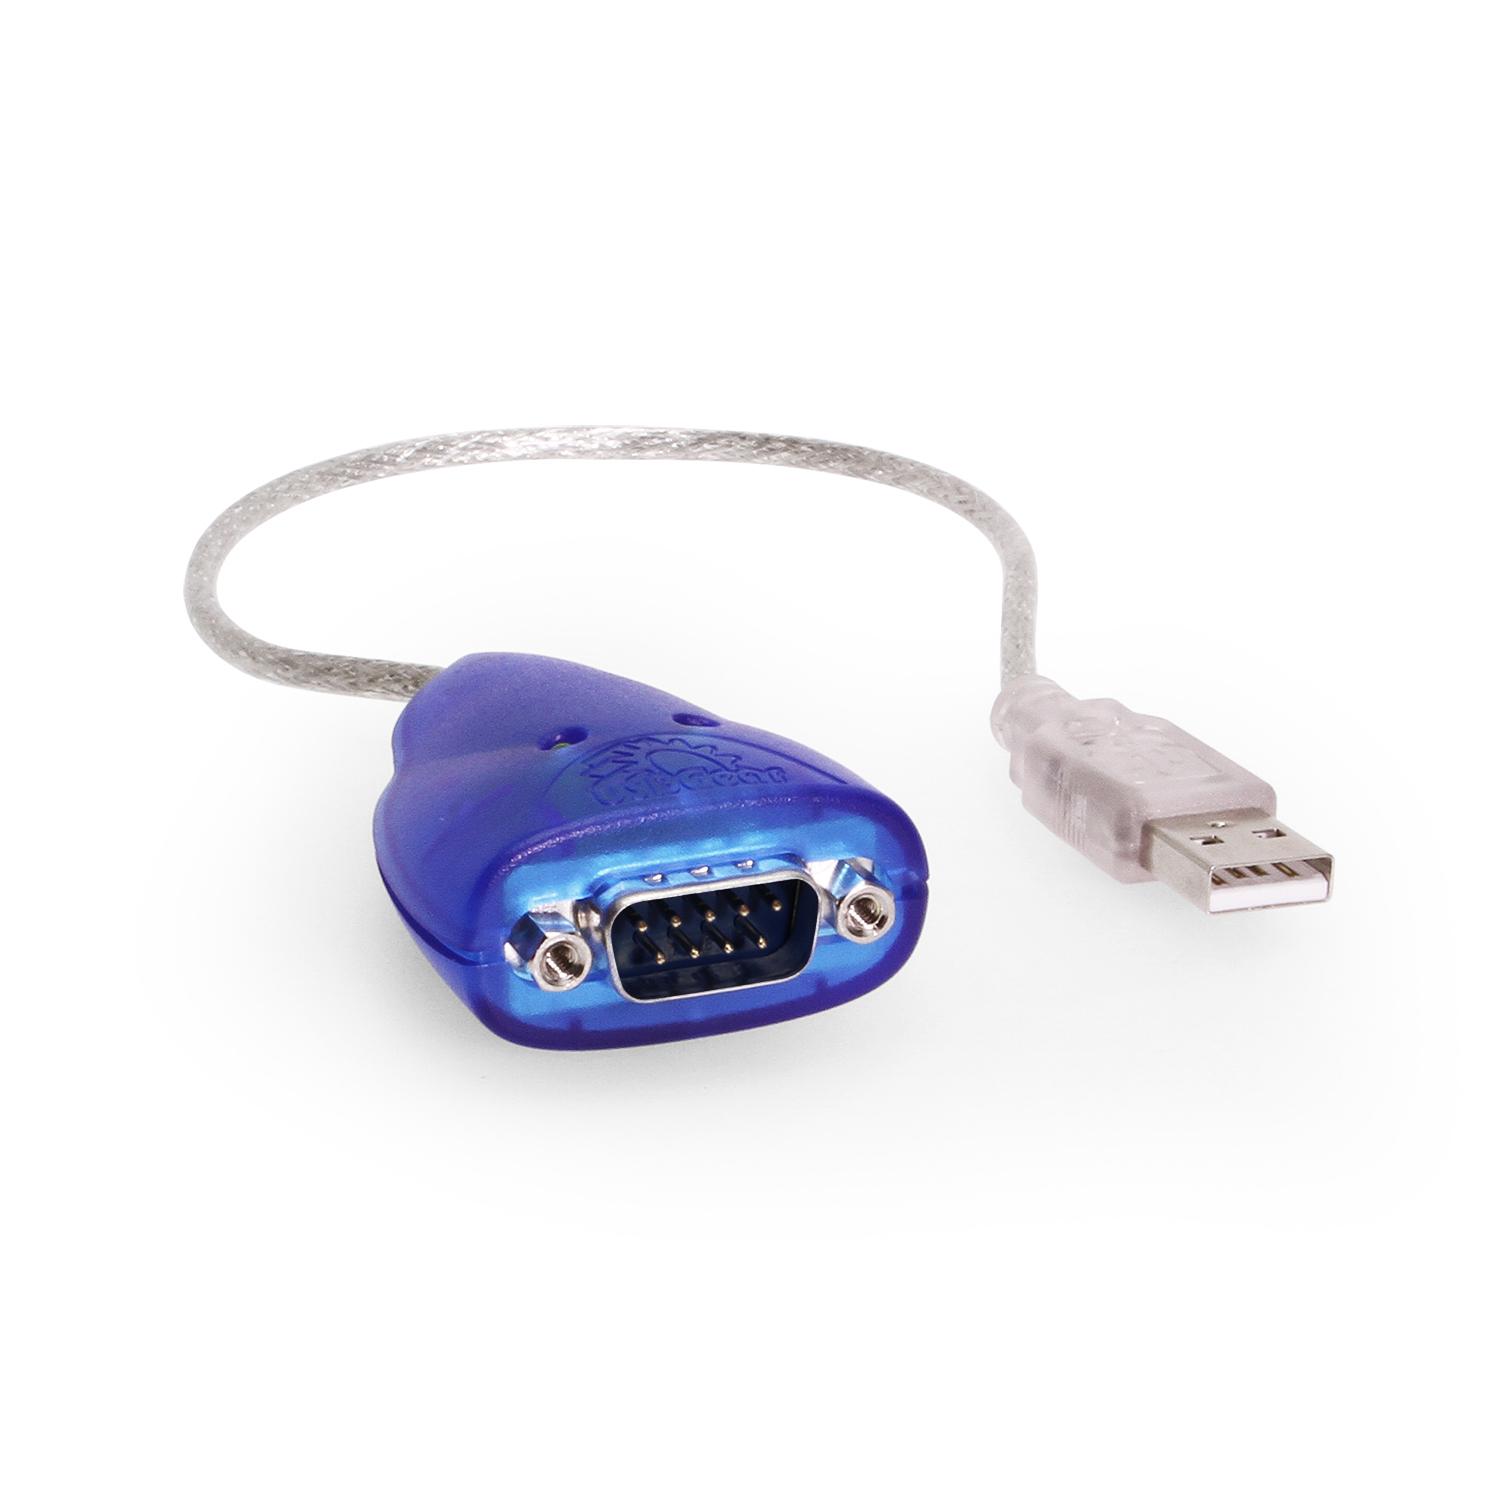 Gearmo Mini USB Serial Adapter Hi-Speed 920K FTDI Chip with Windows 10 Support 